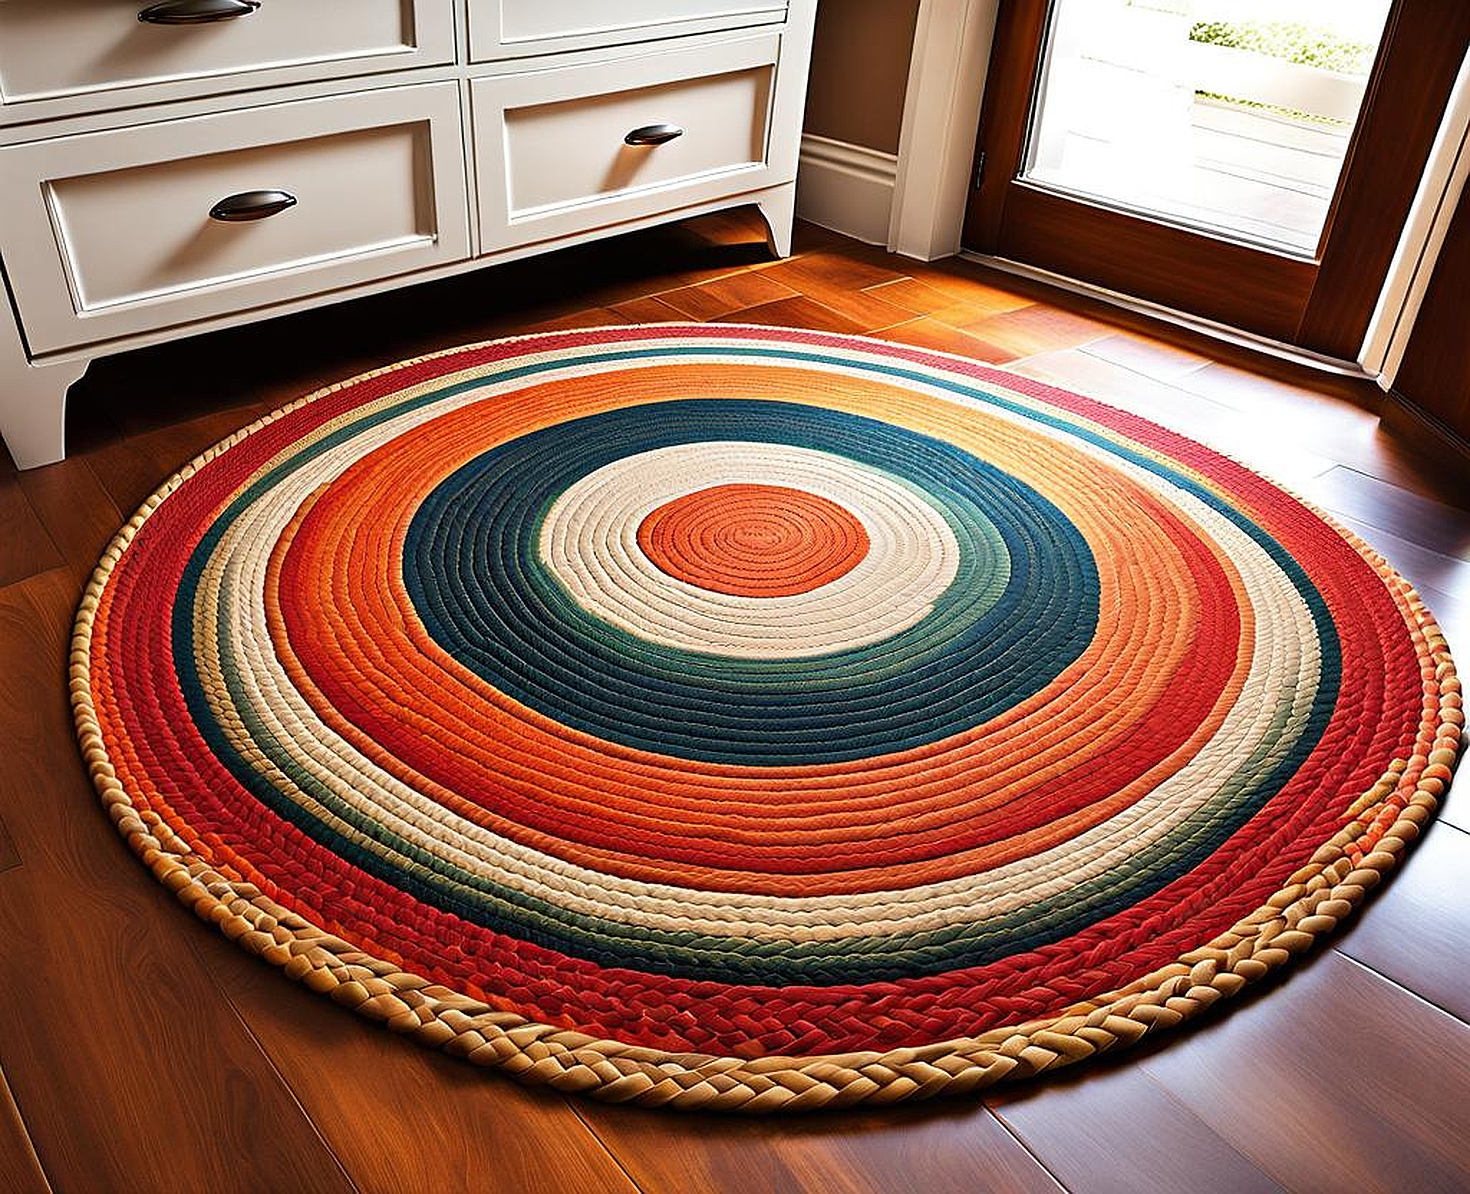 round braided rugs for kitchen